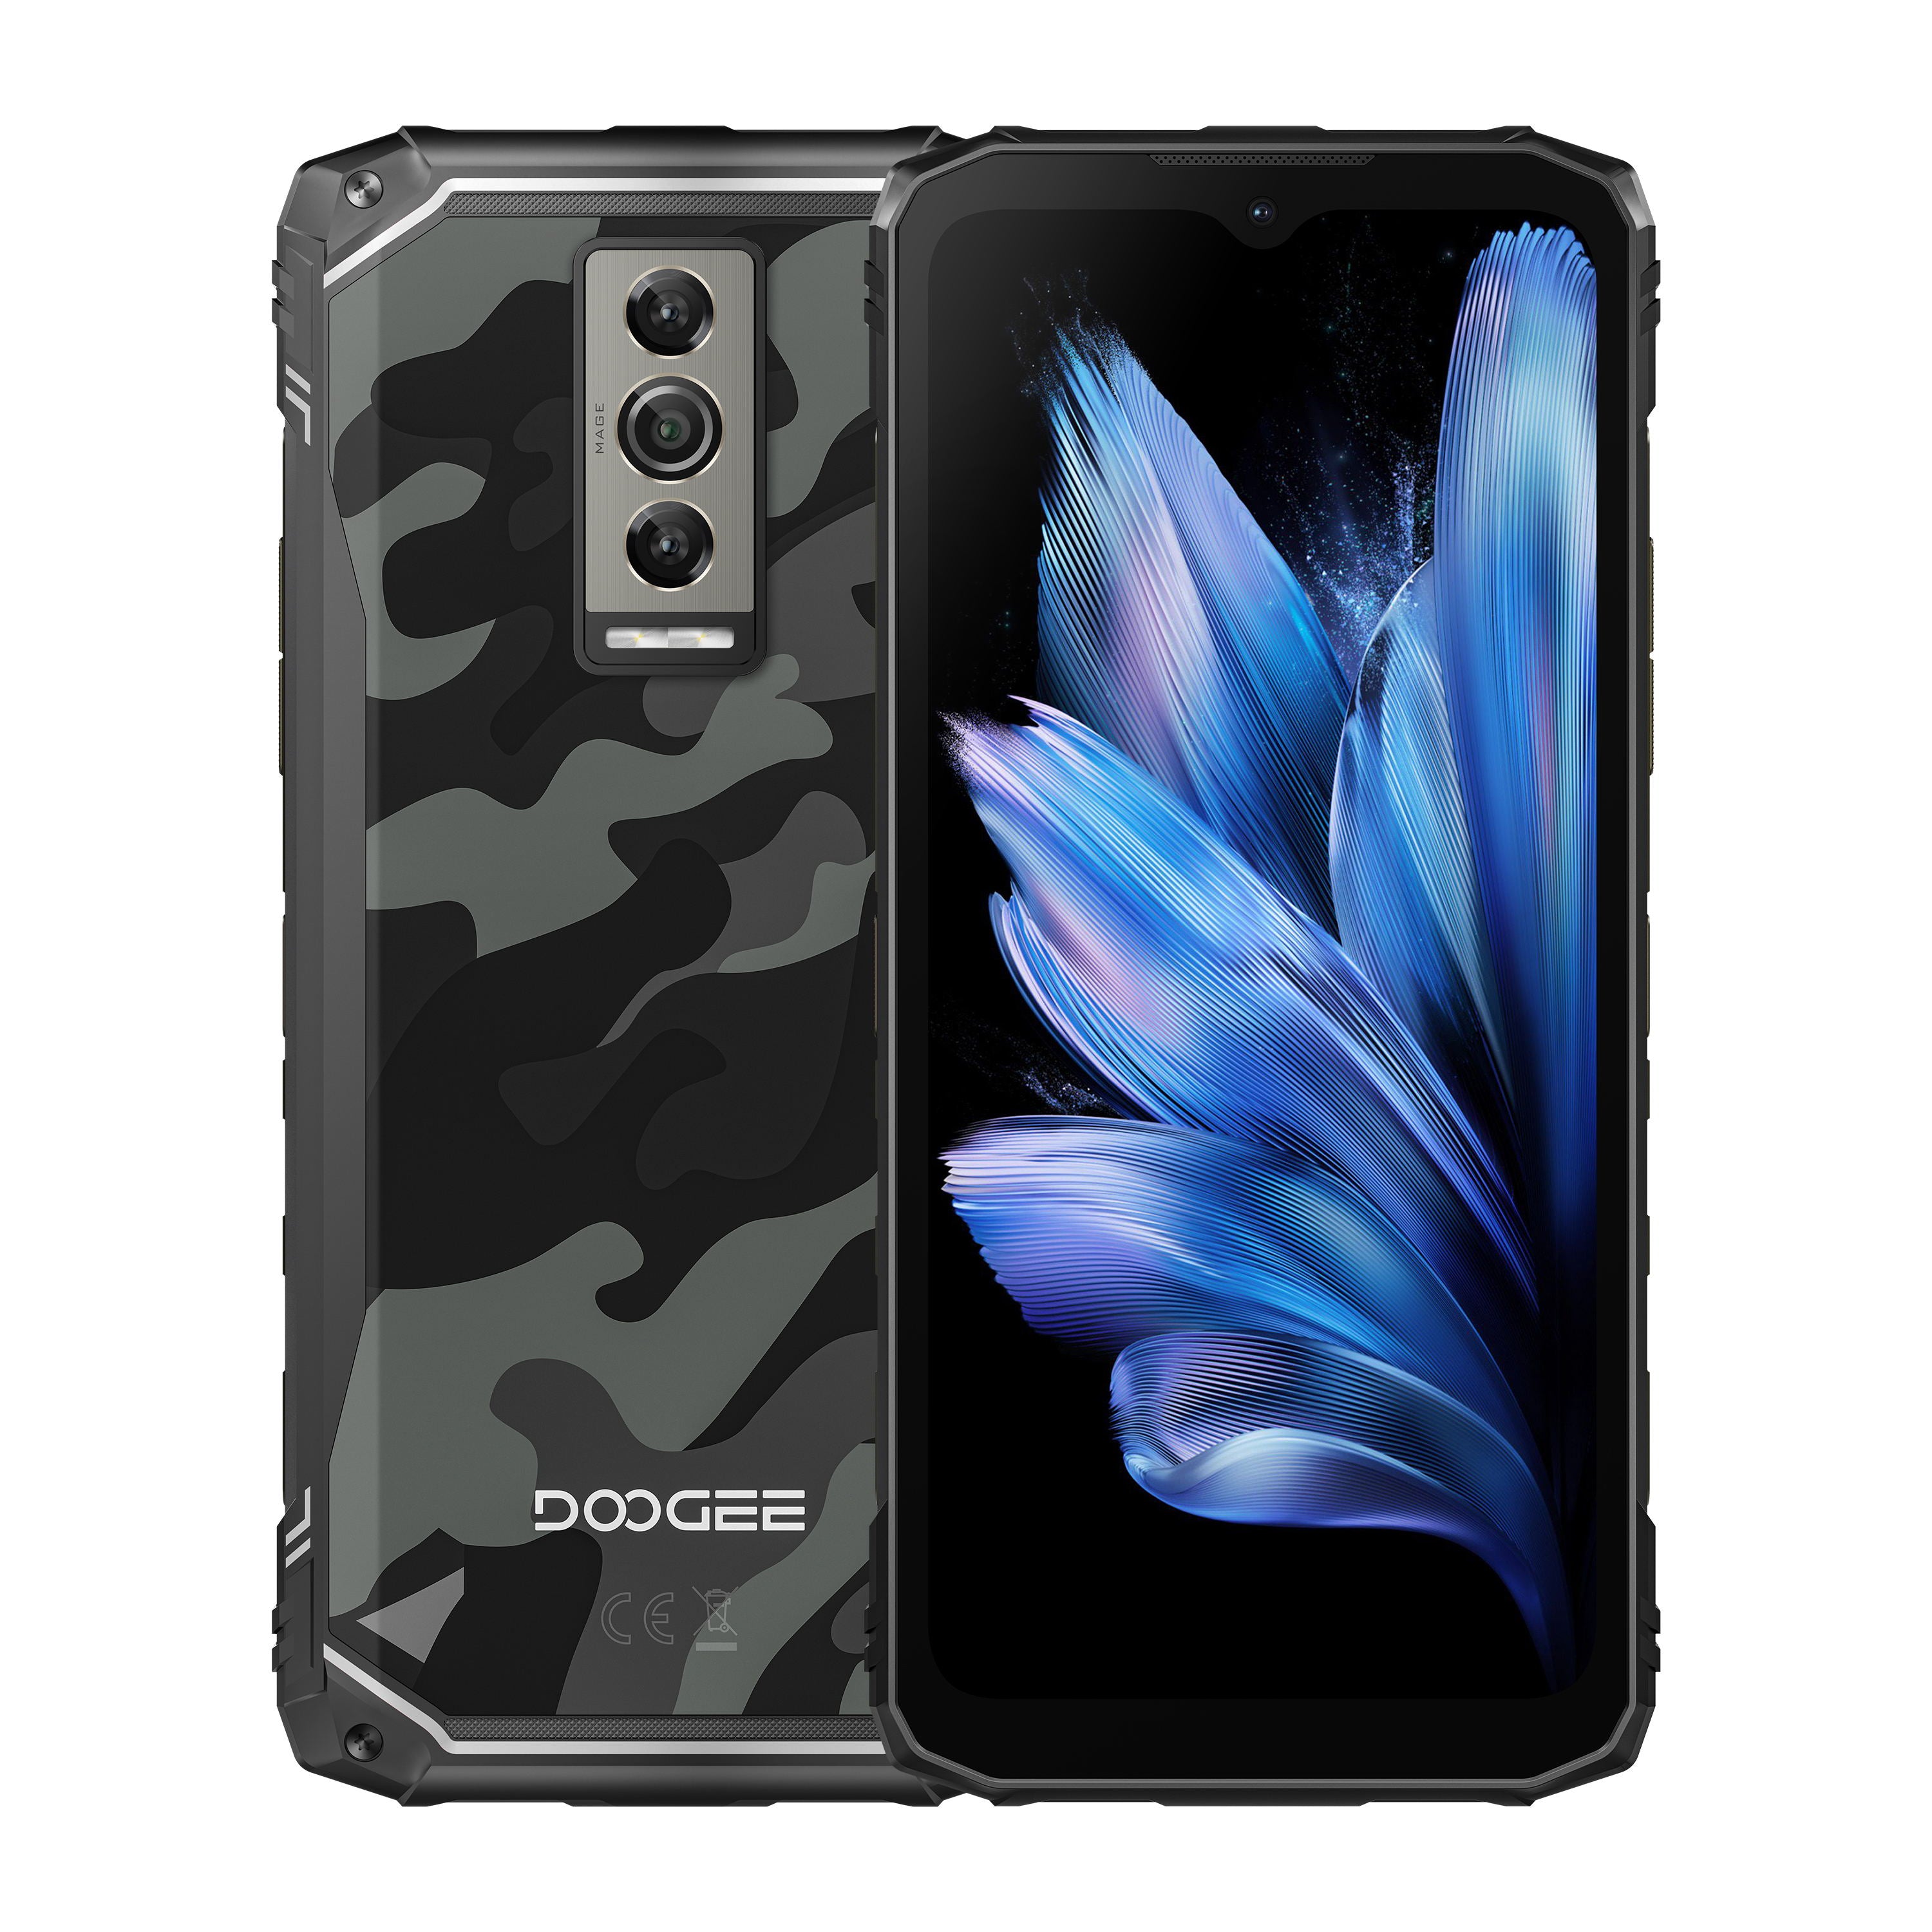 DOOGEE Blade10 11mm ultra-thin body Rugged Phone